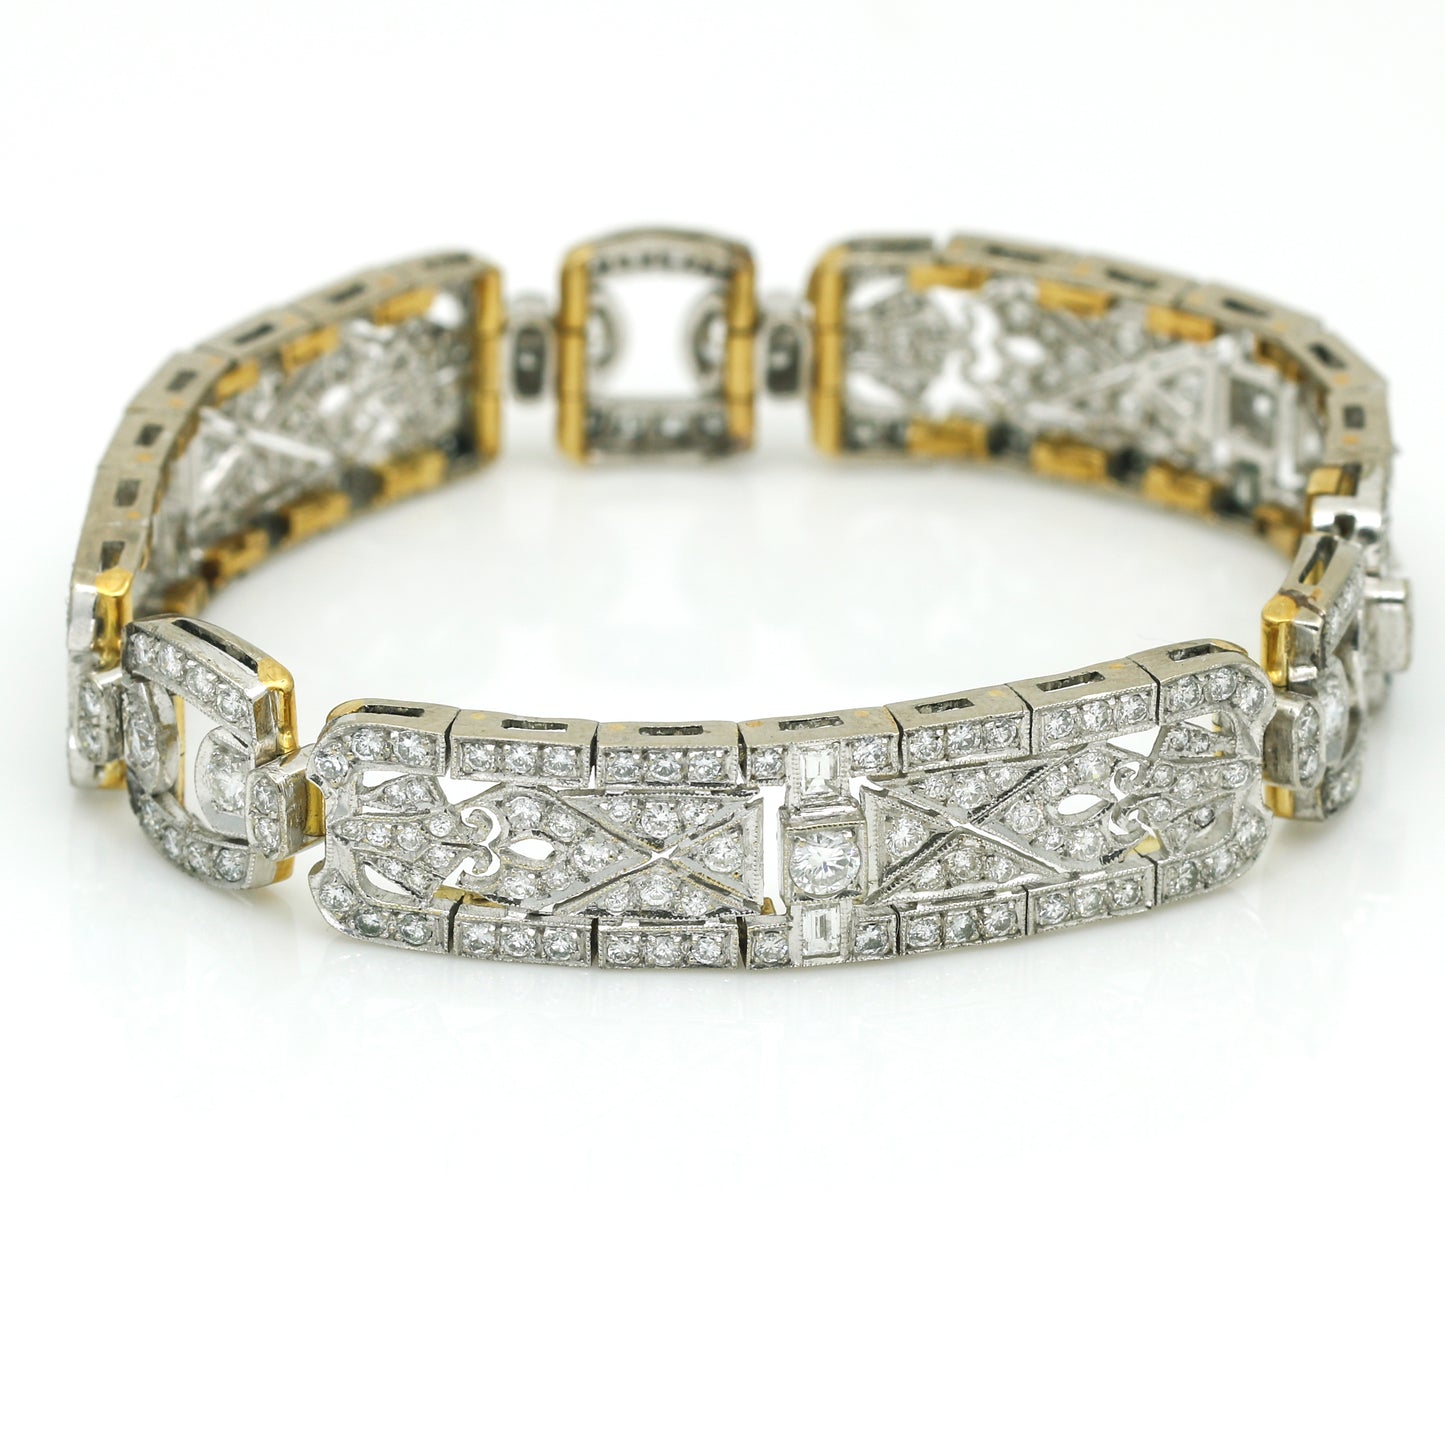 Women's Art Deco Diamond Link Bracelet in 18k Gold and Platinum